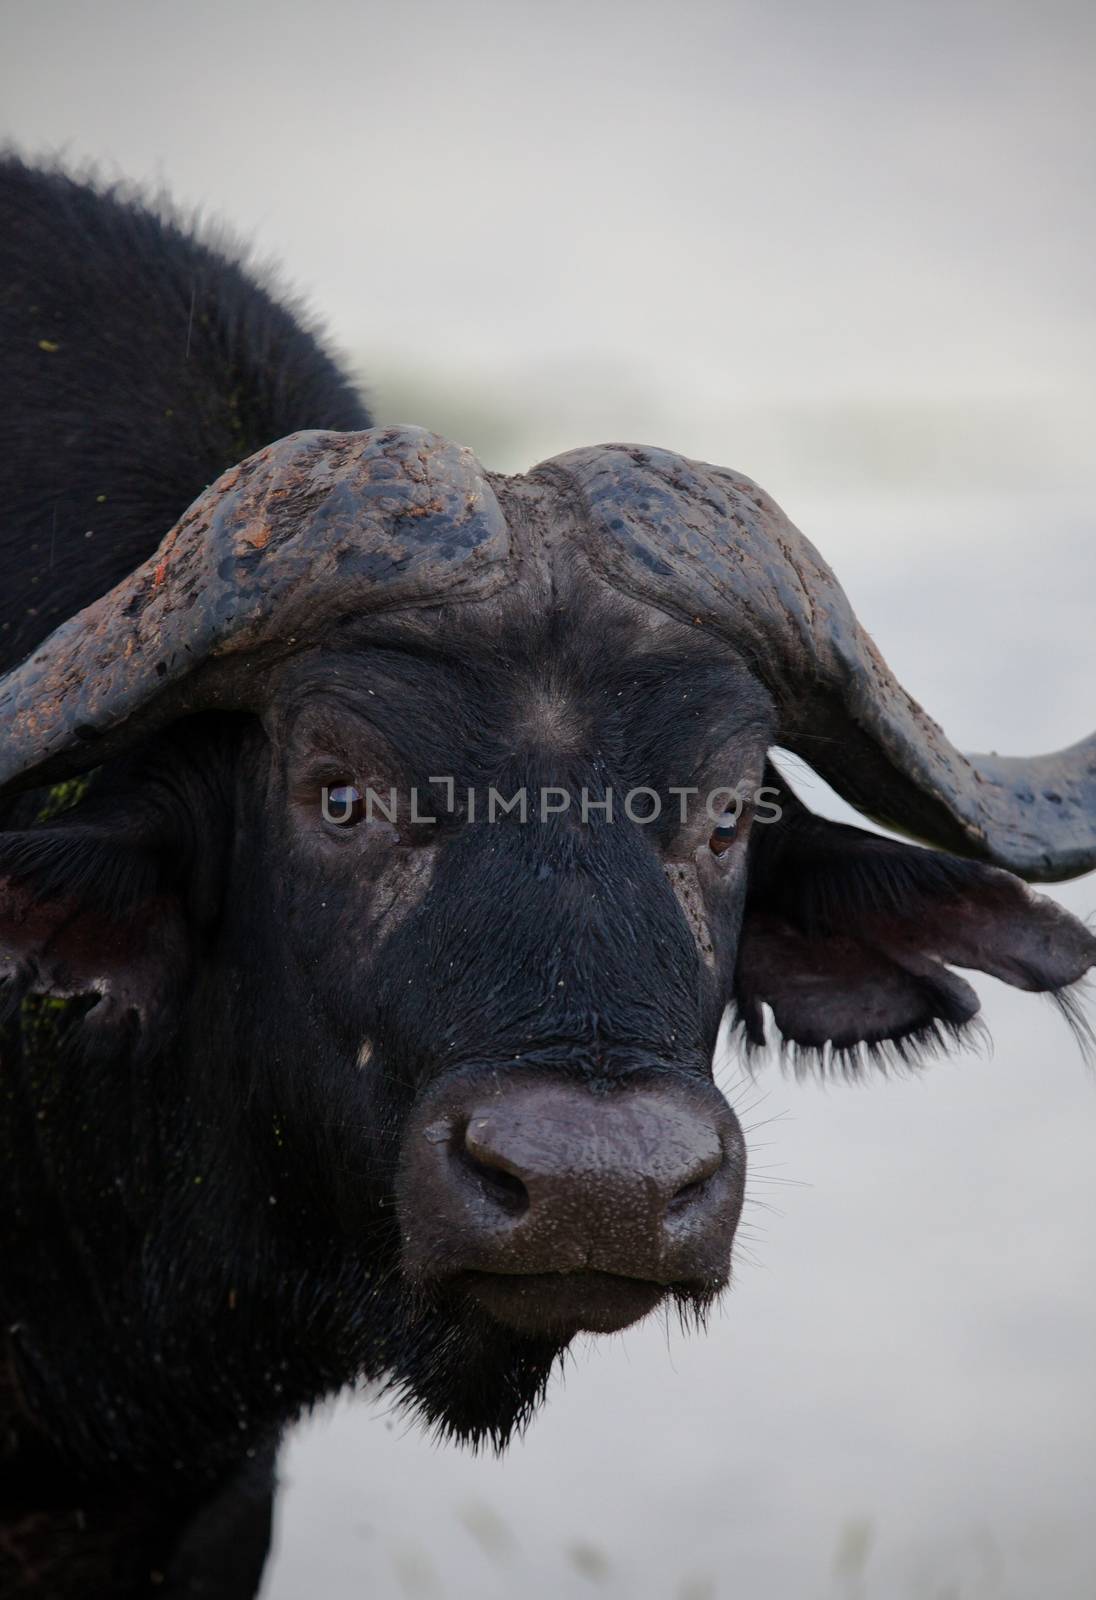 buffalo of tanzania national park by moizhusein